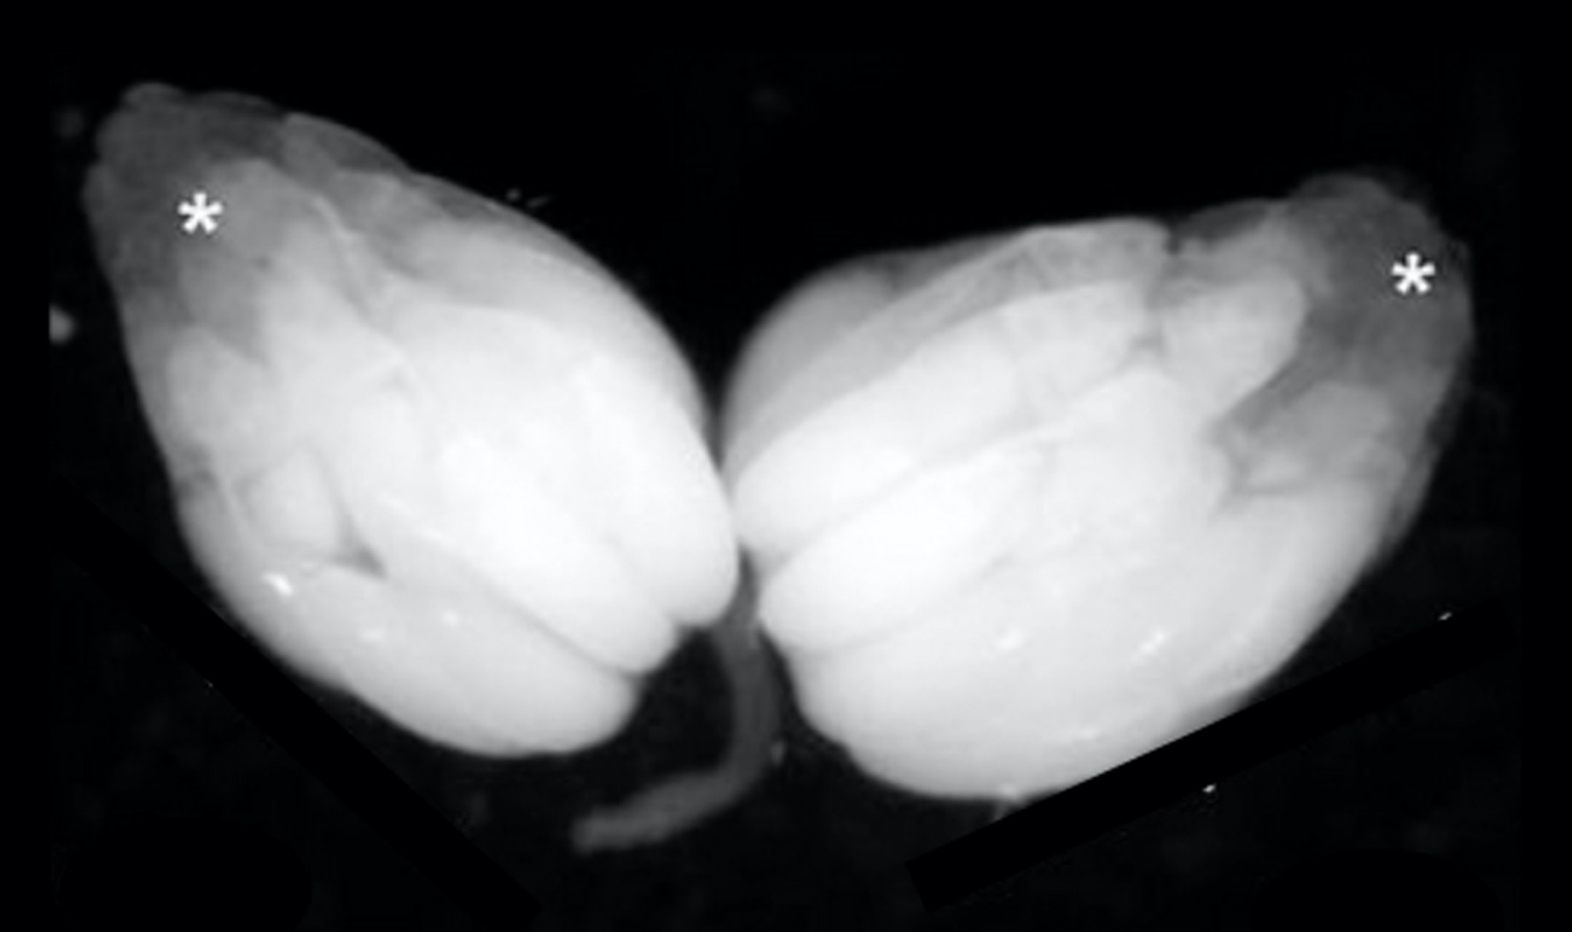 Drosophila melanogaster ovaries under a stereomicroscope